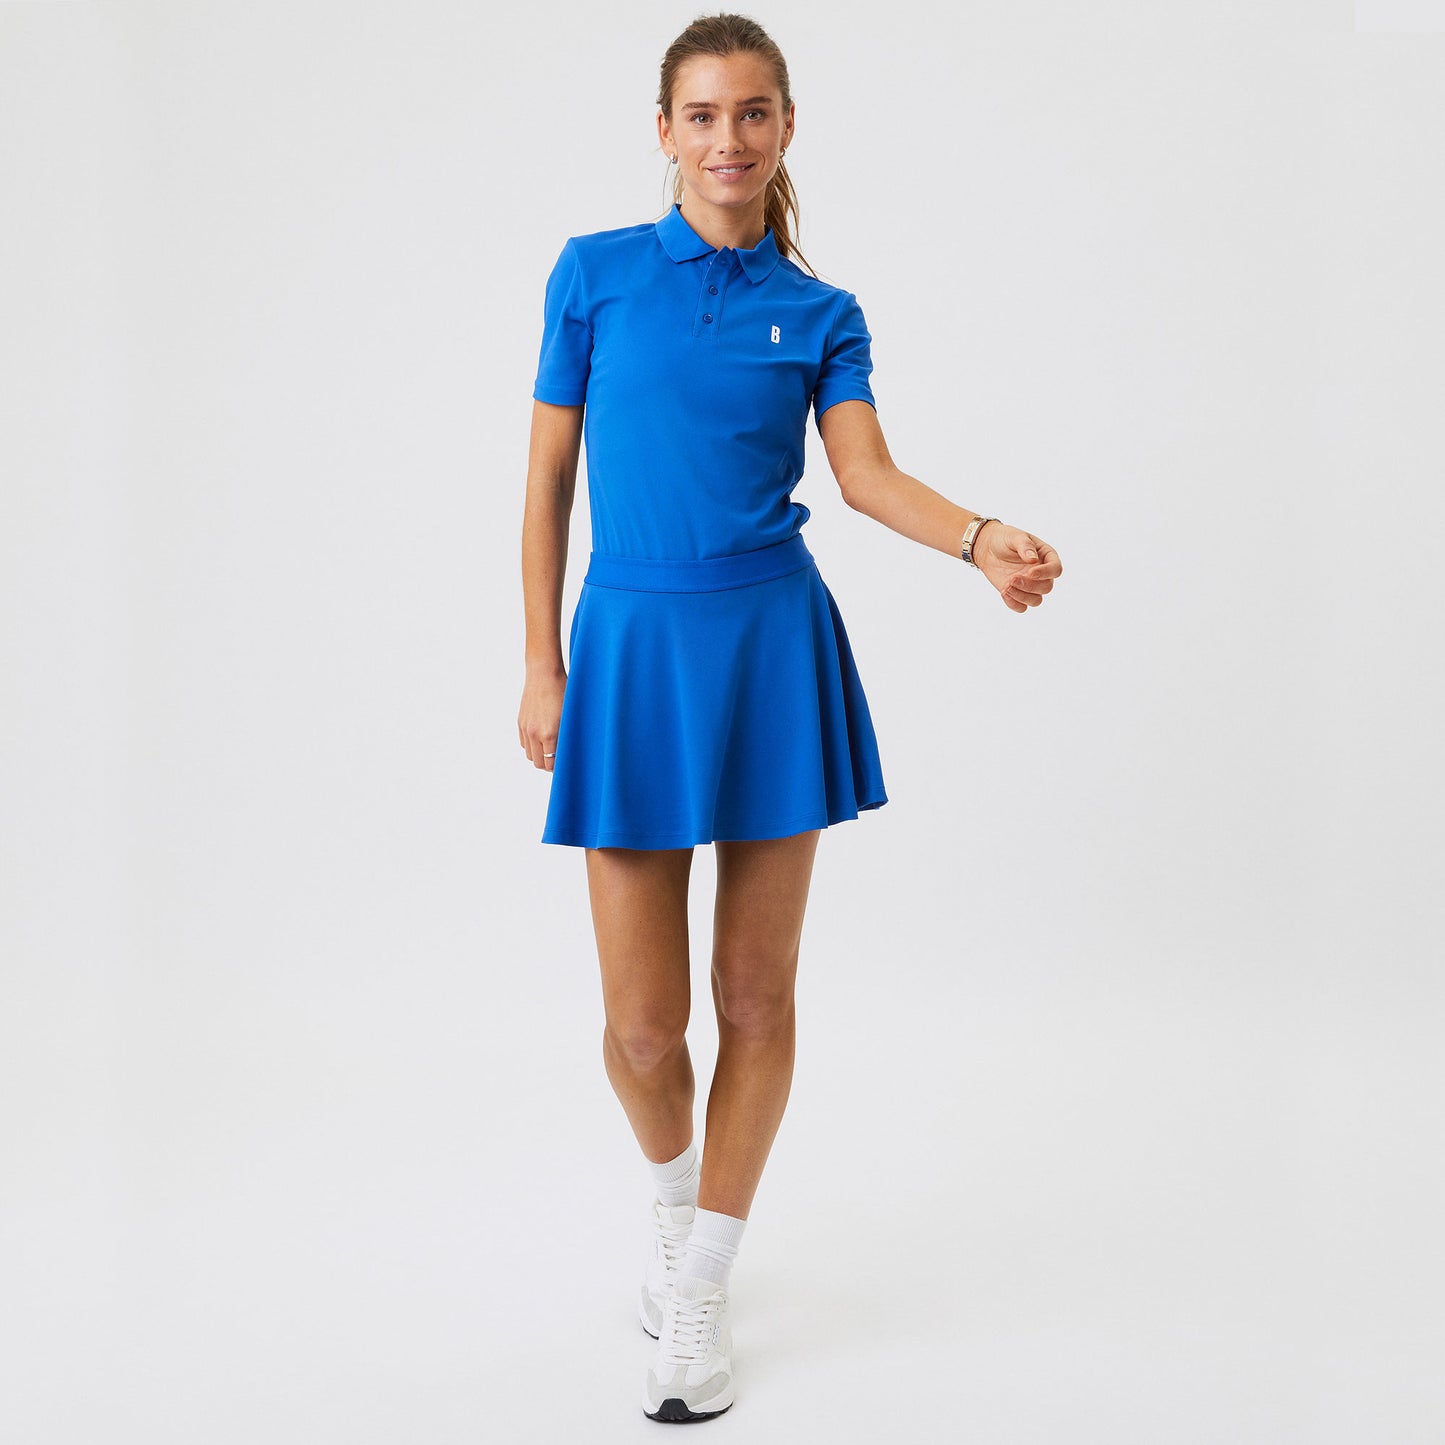 Björn Borg Ace Women's Tennis Skirt Blue (4)